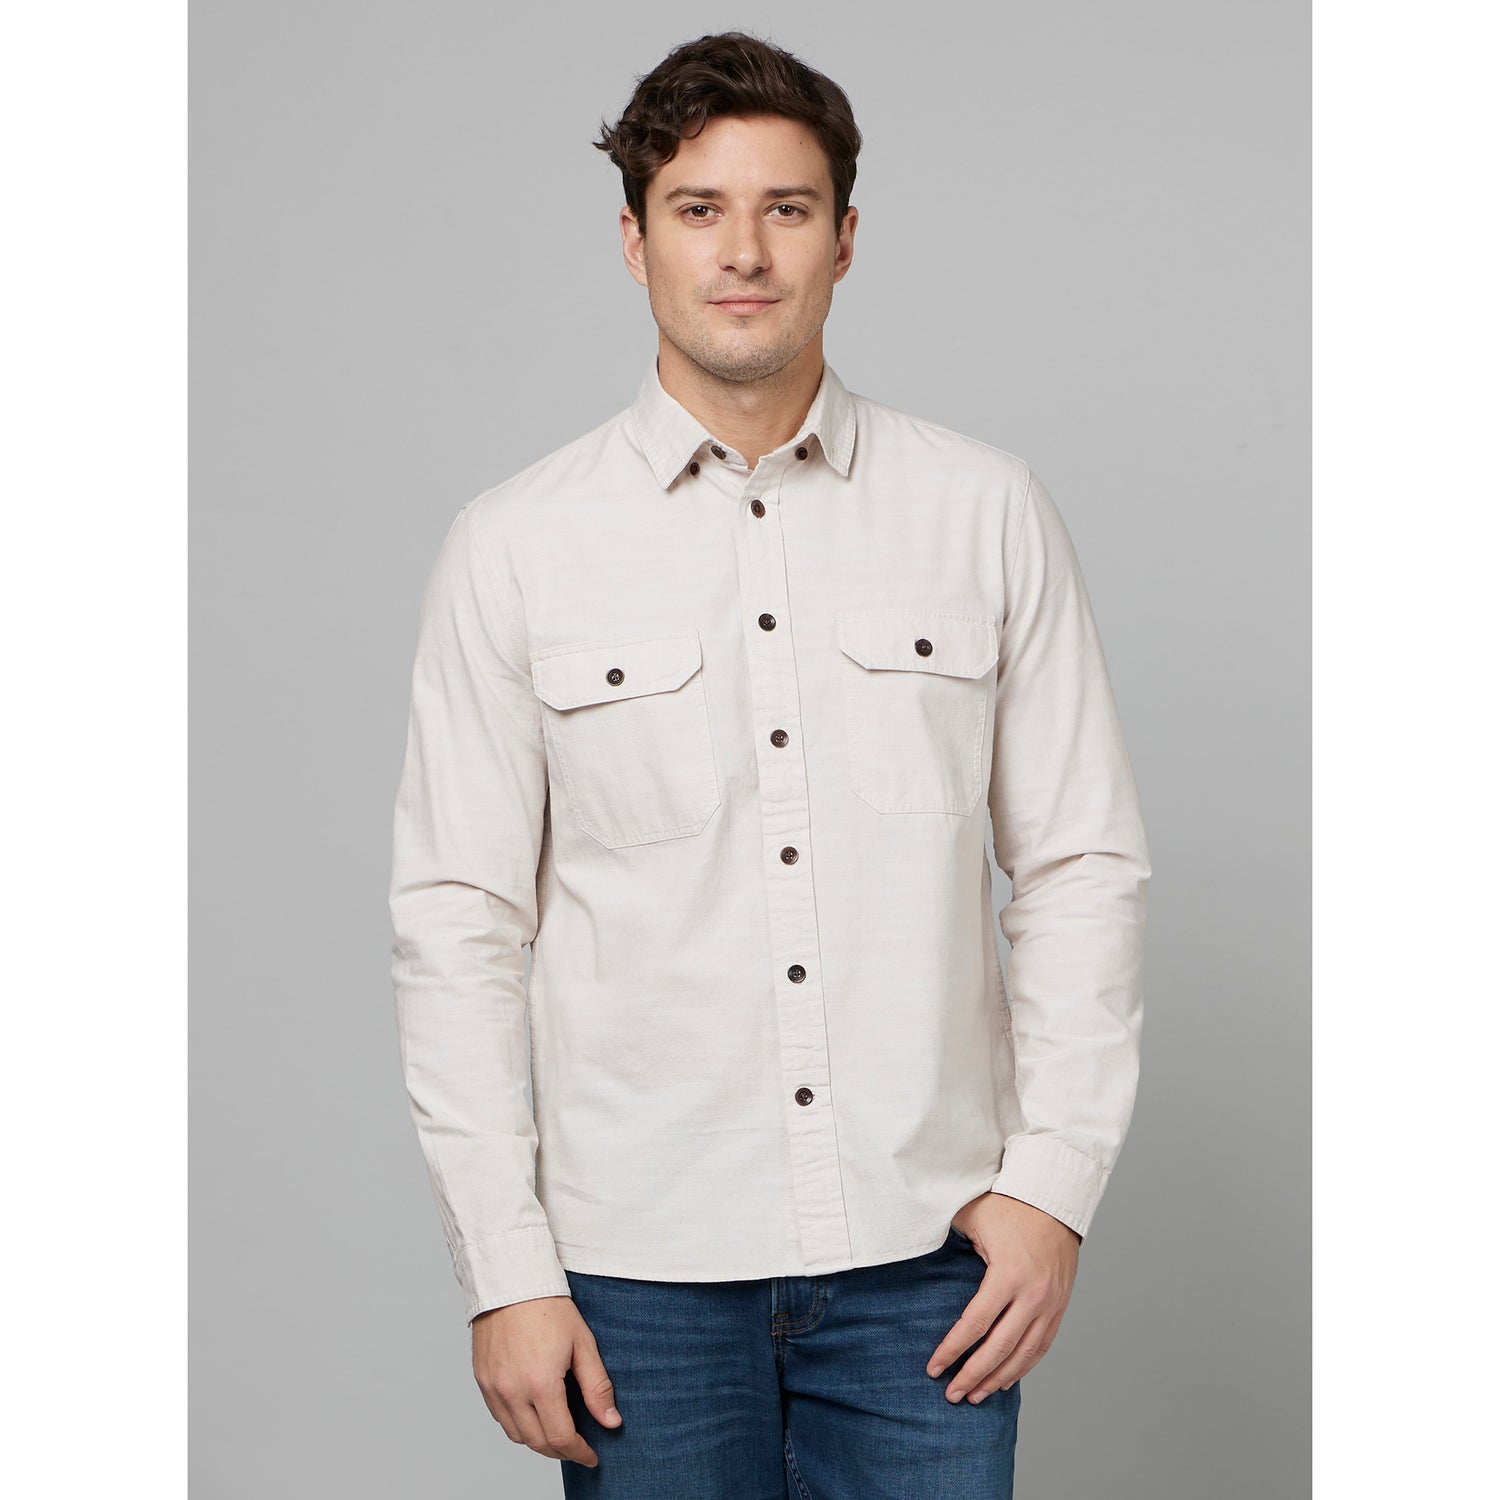 Beige Classic Button-Down Collar Cotton Casual Shirt (FANA)